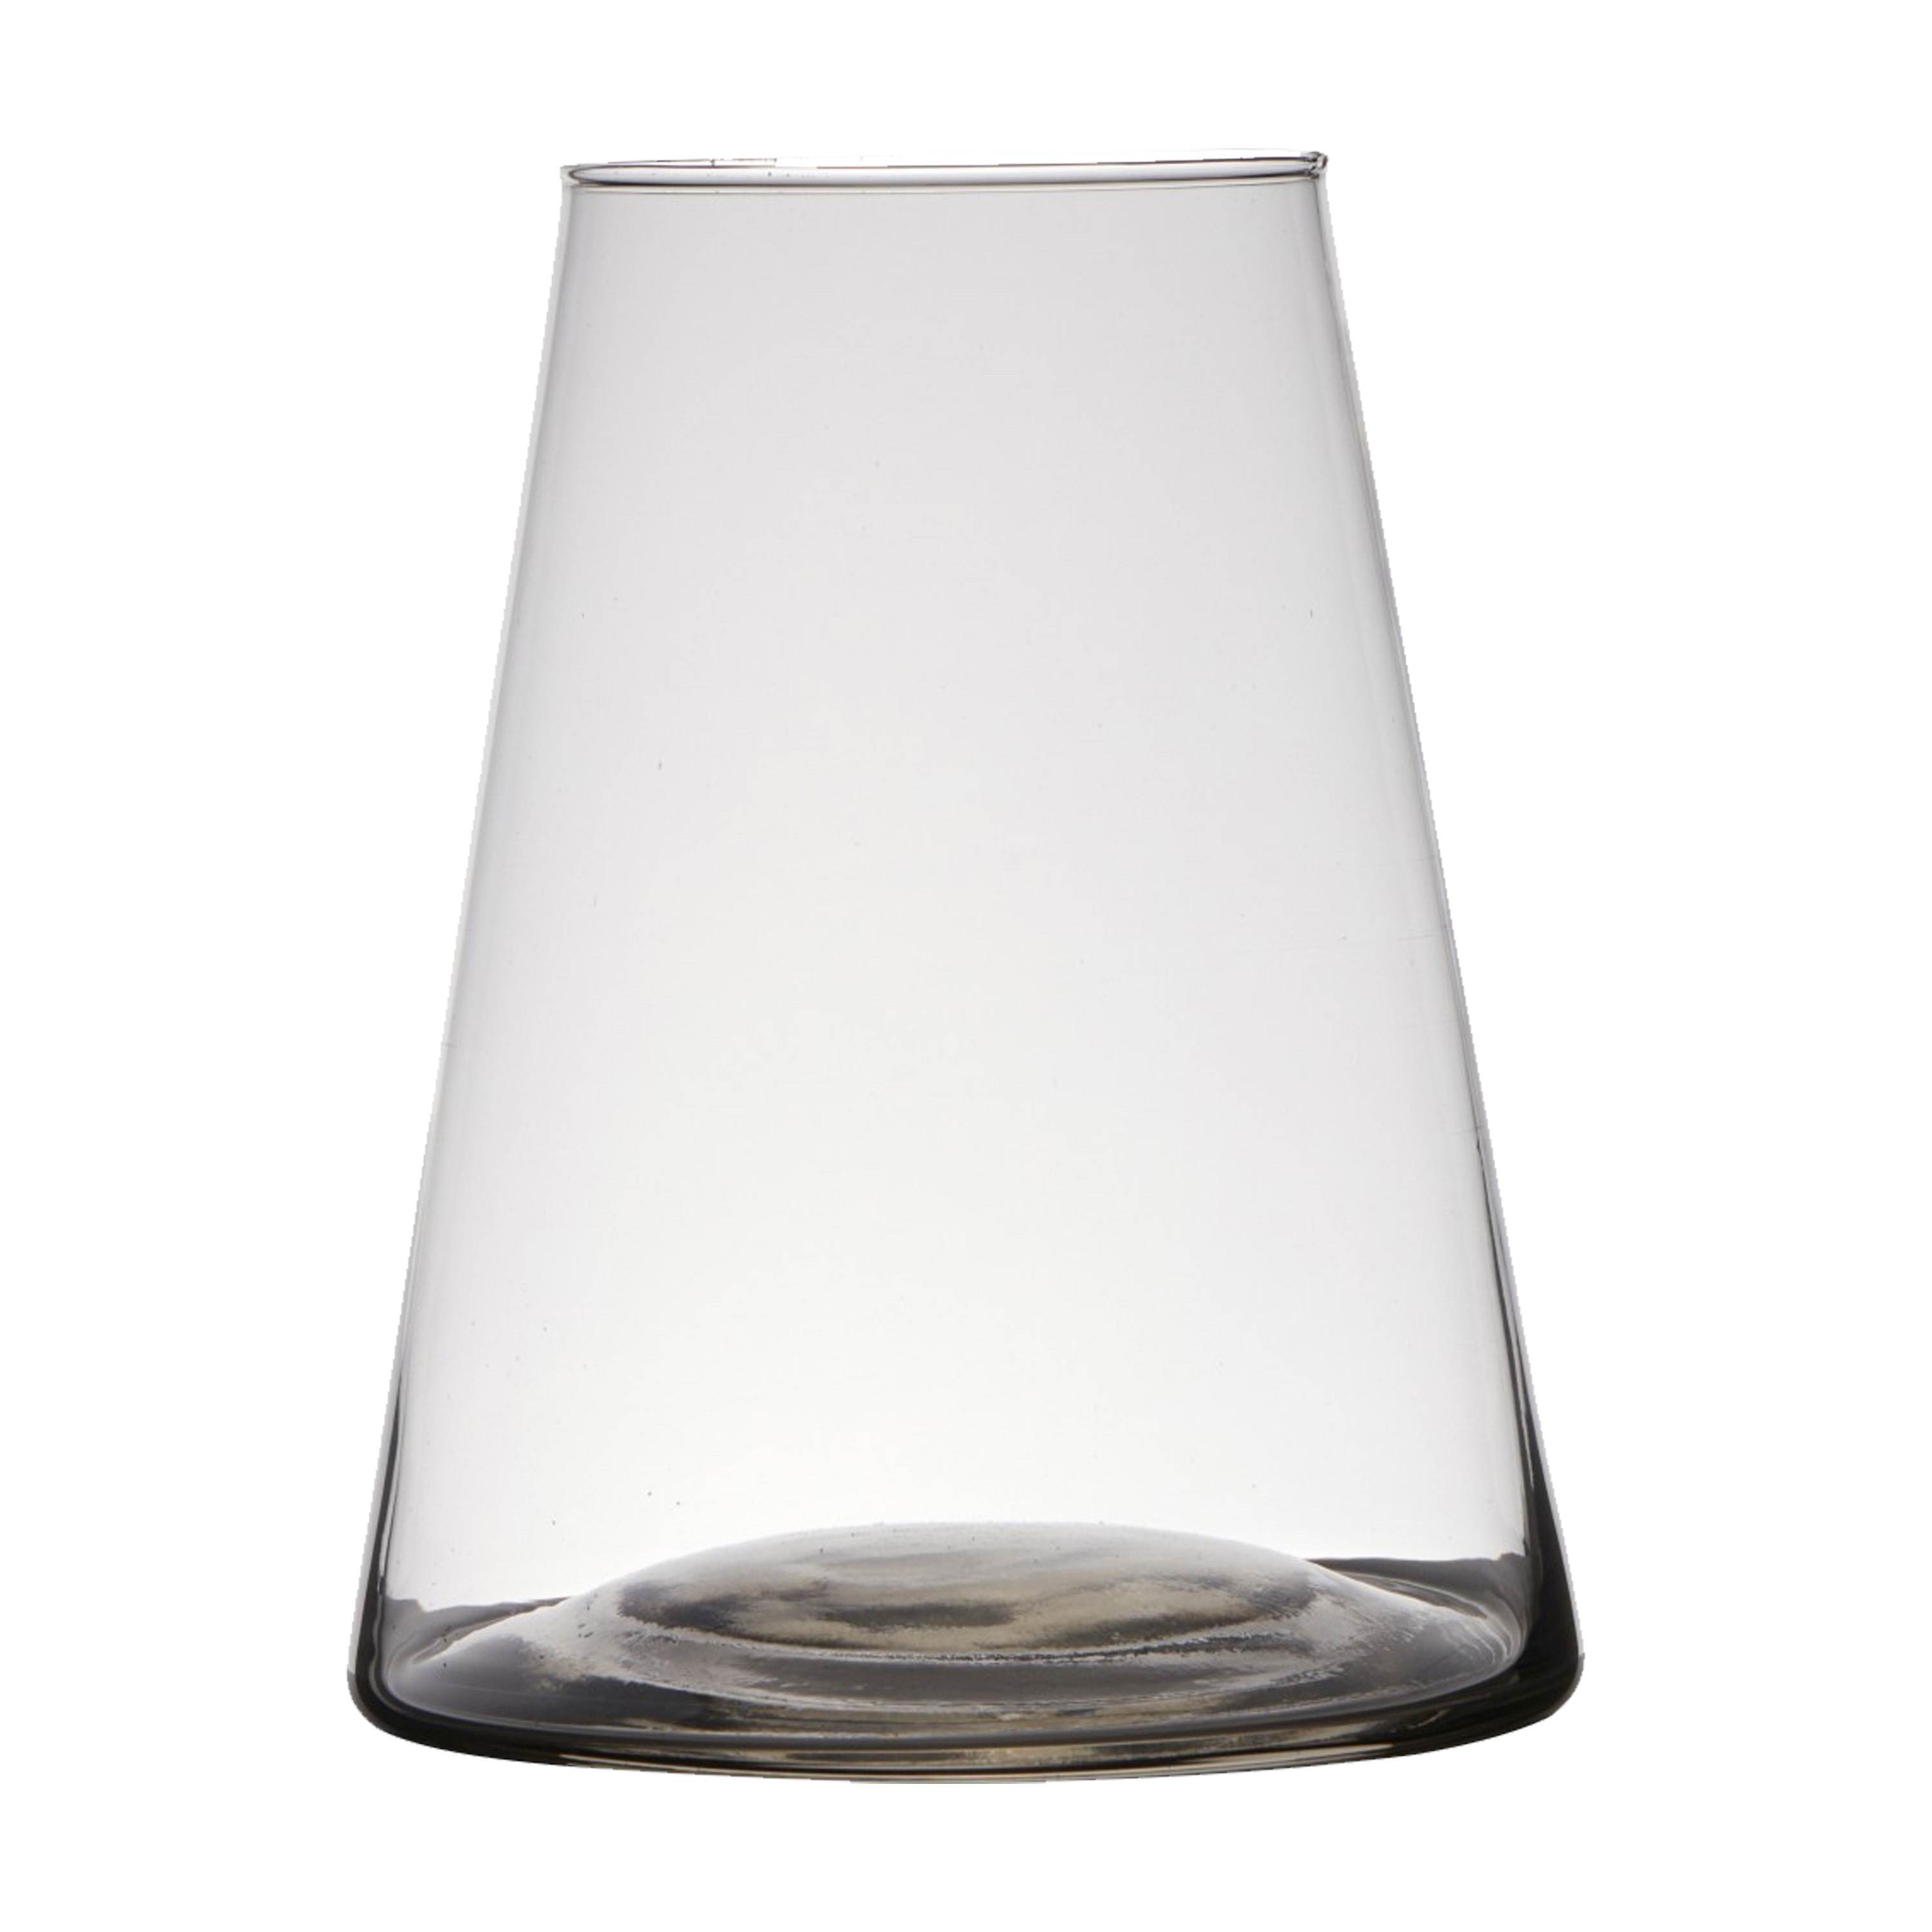 Hakbijl Glass Bloemenvaas Donna transparant eco glas D16 x H20 cm home-basics vaas